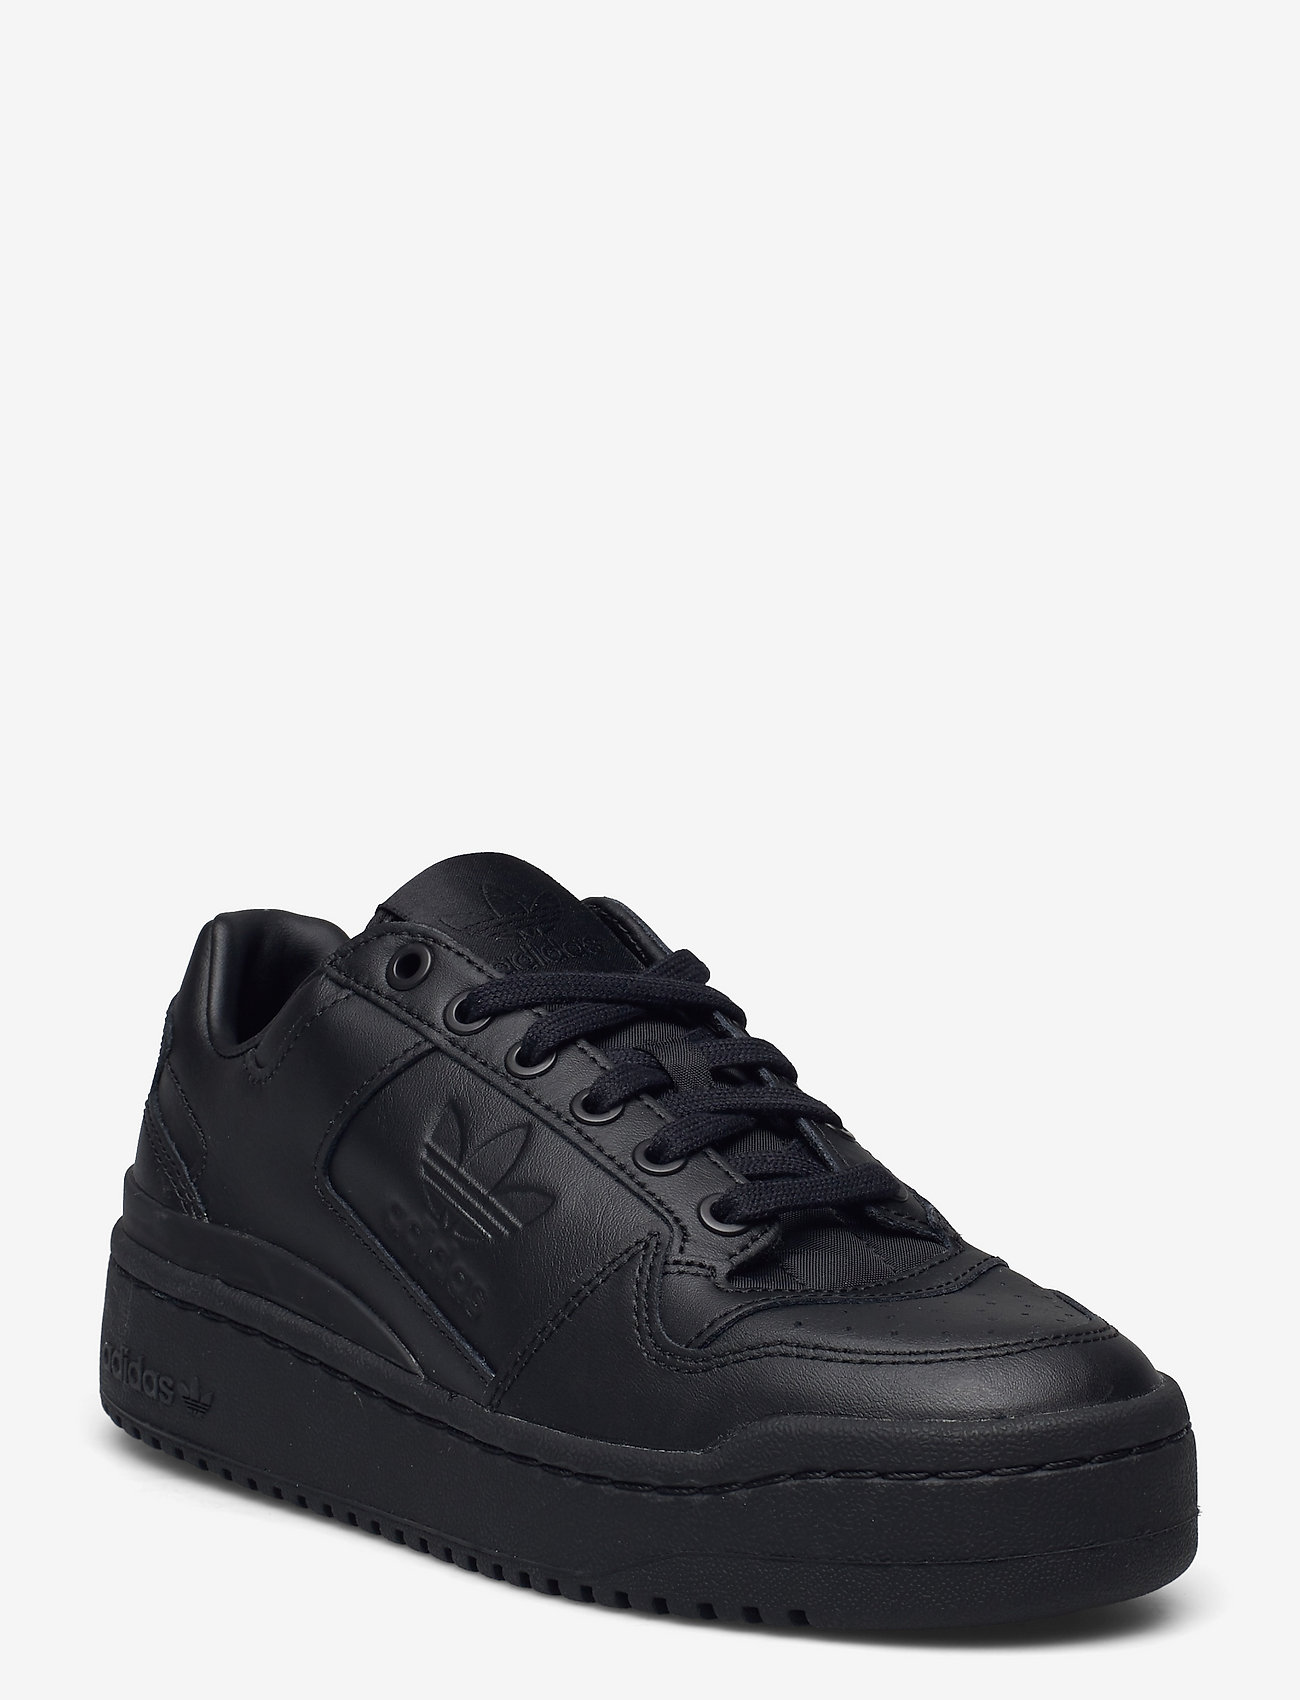 adidas Originals - FORUM BOLD SHOES - lage sneakers - cblack/cblack/ftwwht - 0